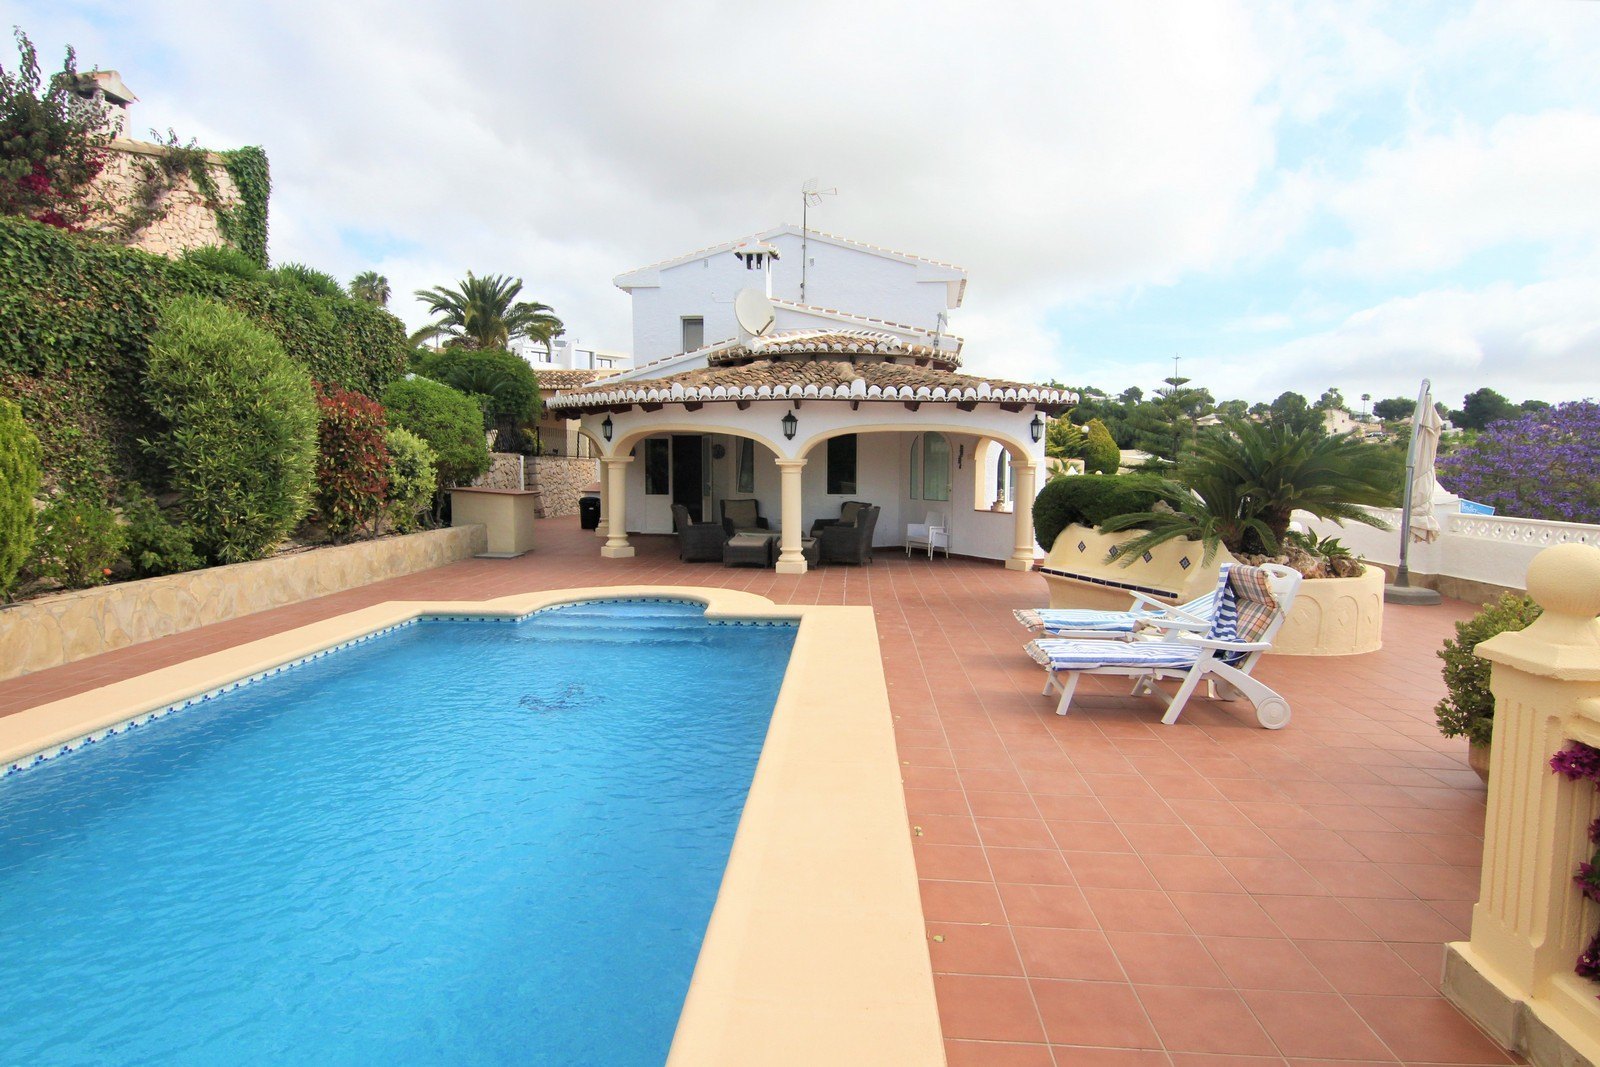 Villa with swimming pool for sale in Moraira.